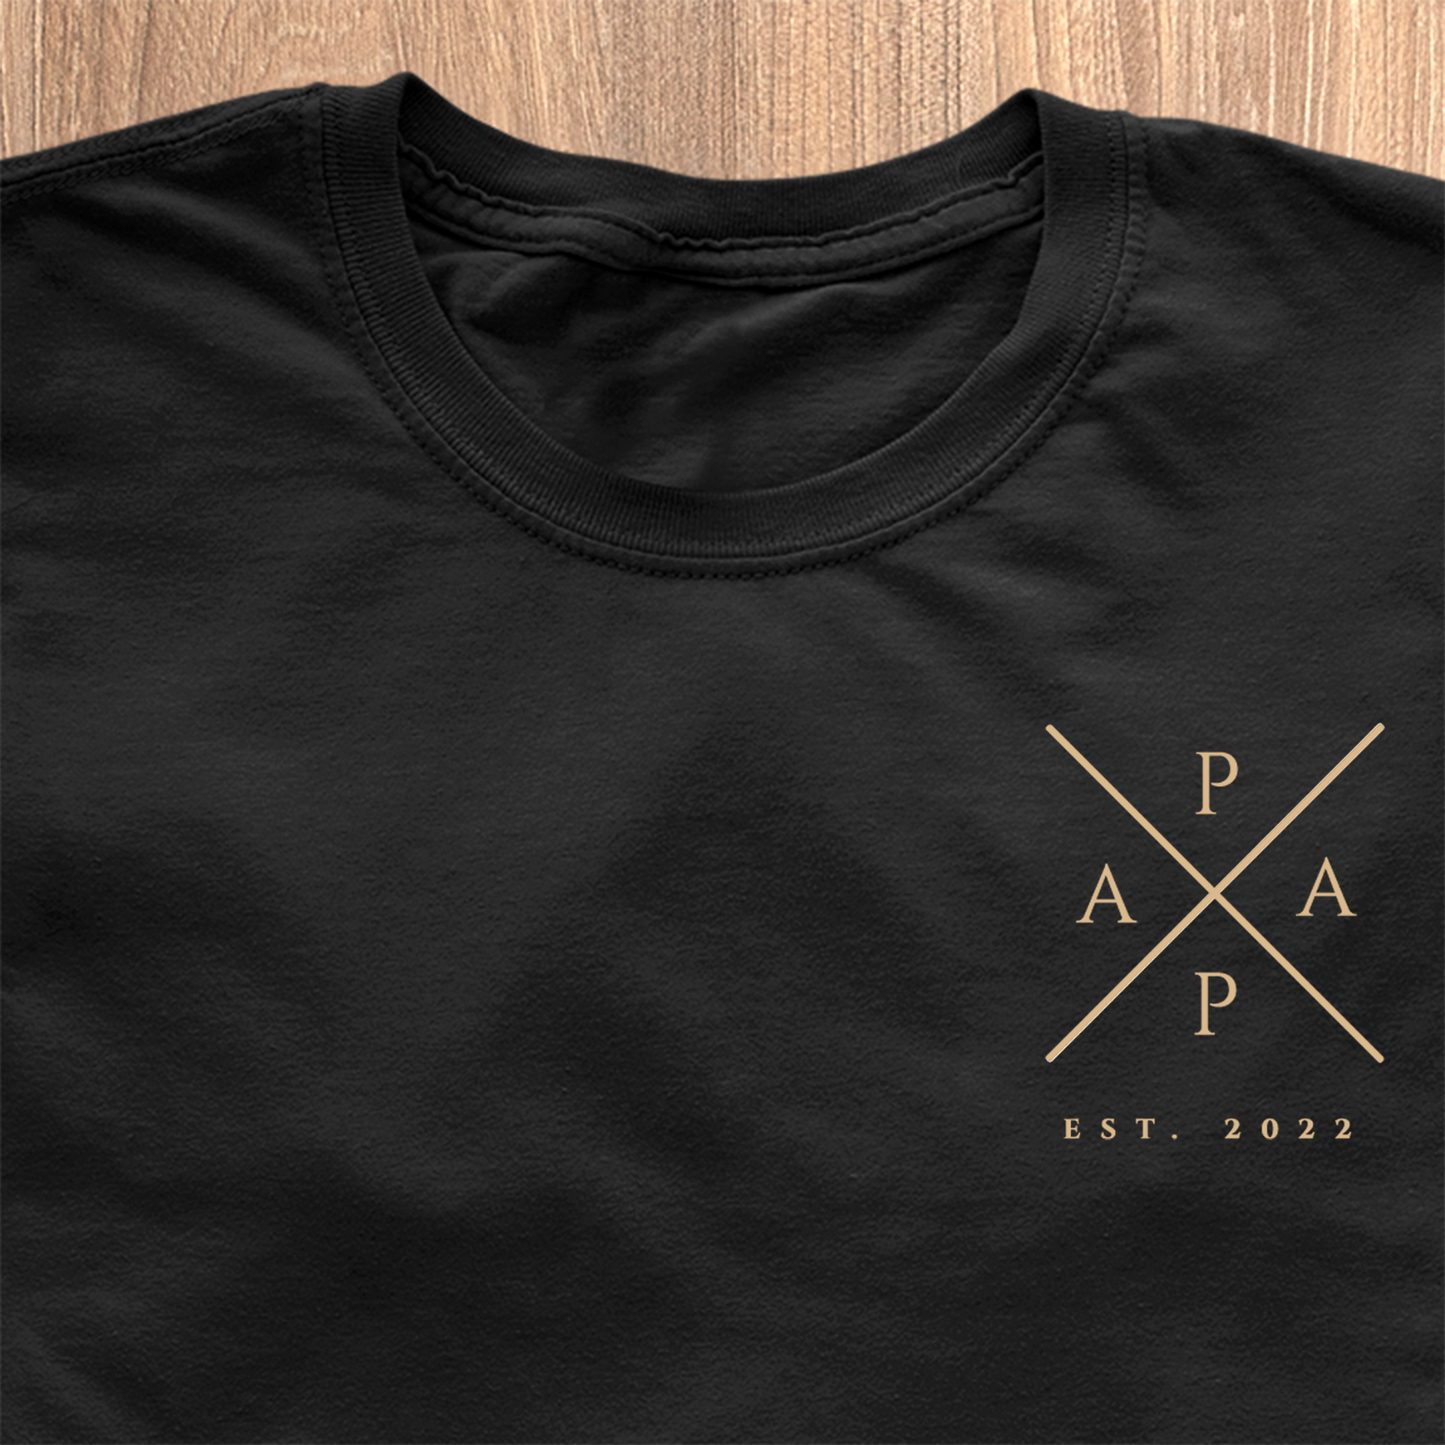 Camiseta Papa Cross - Data Personalizada